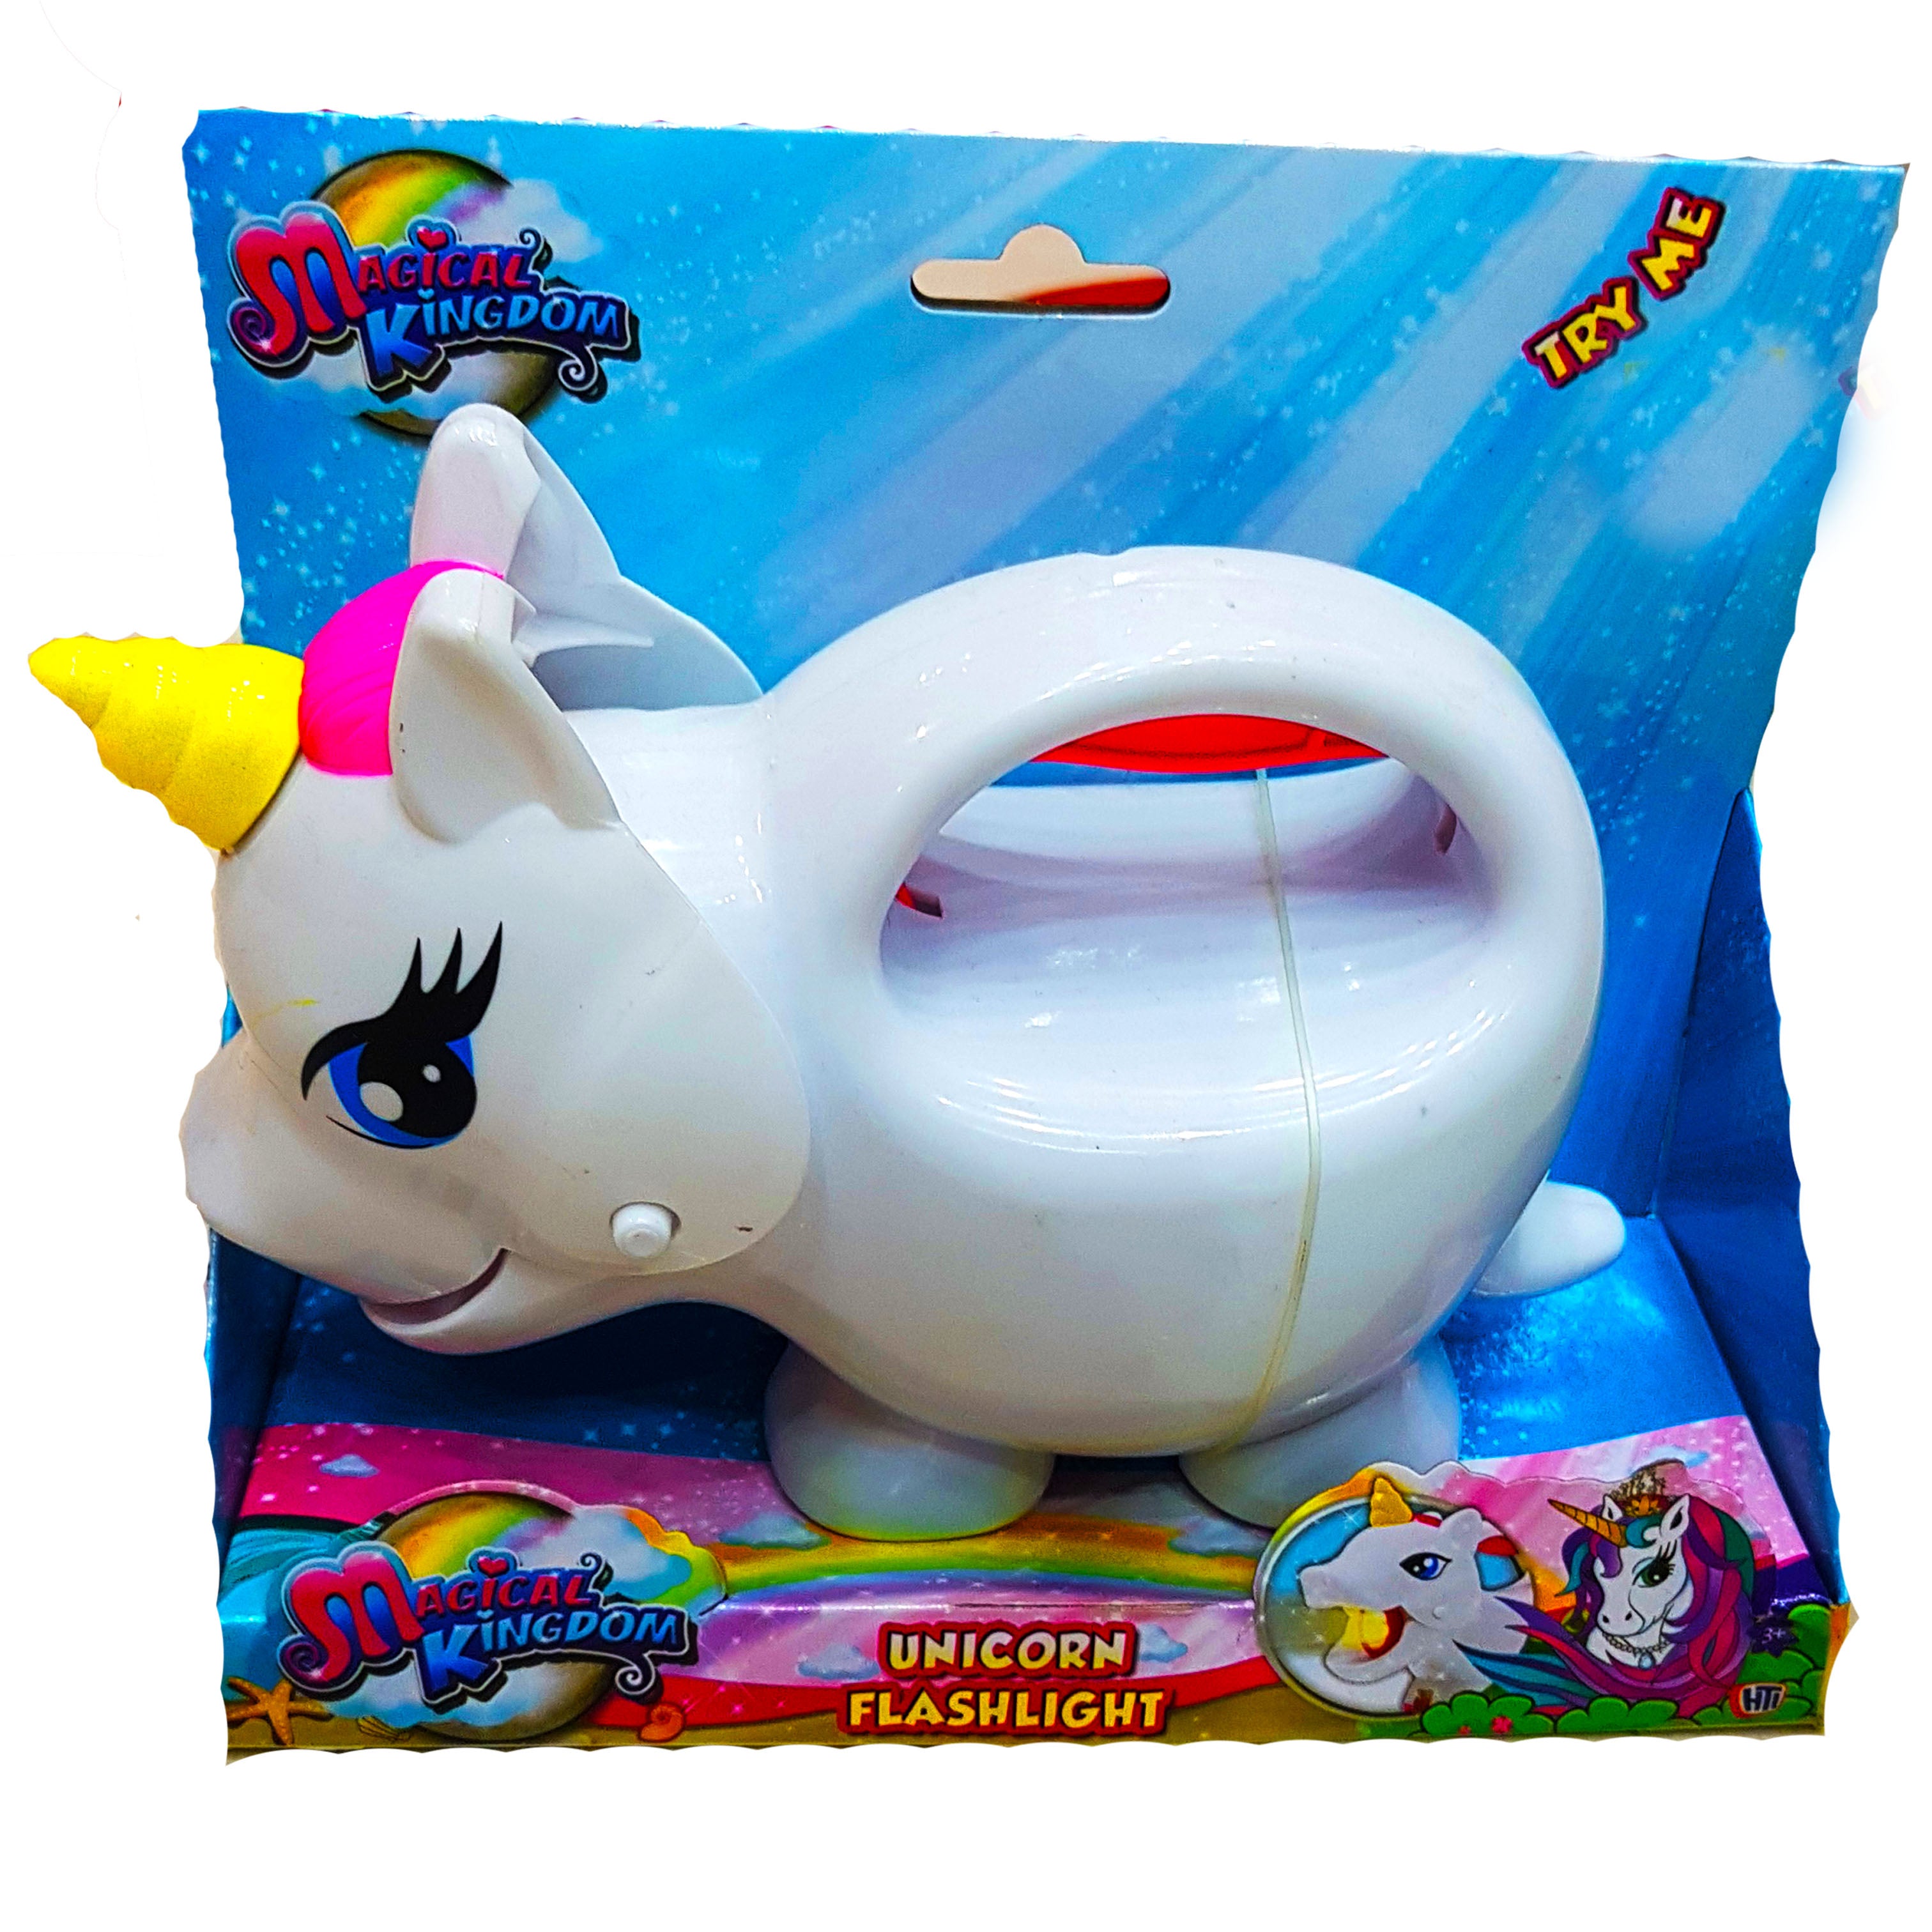 Magical Kingdom Unicorn Flashlight - Enchanting Toy for Girls Ages 3+